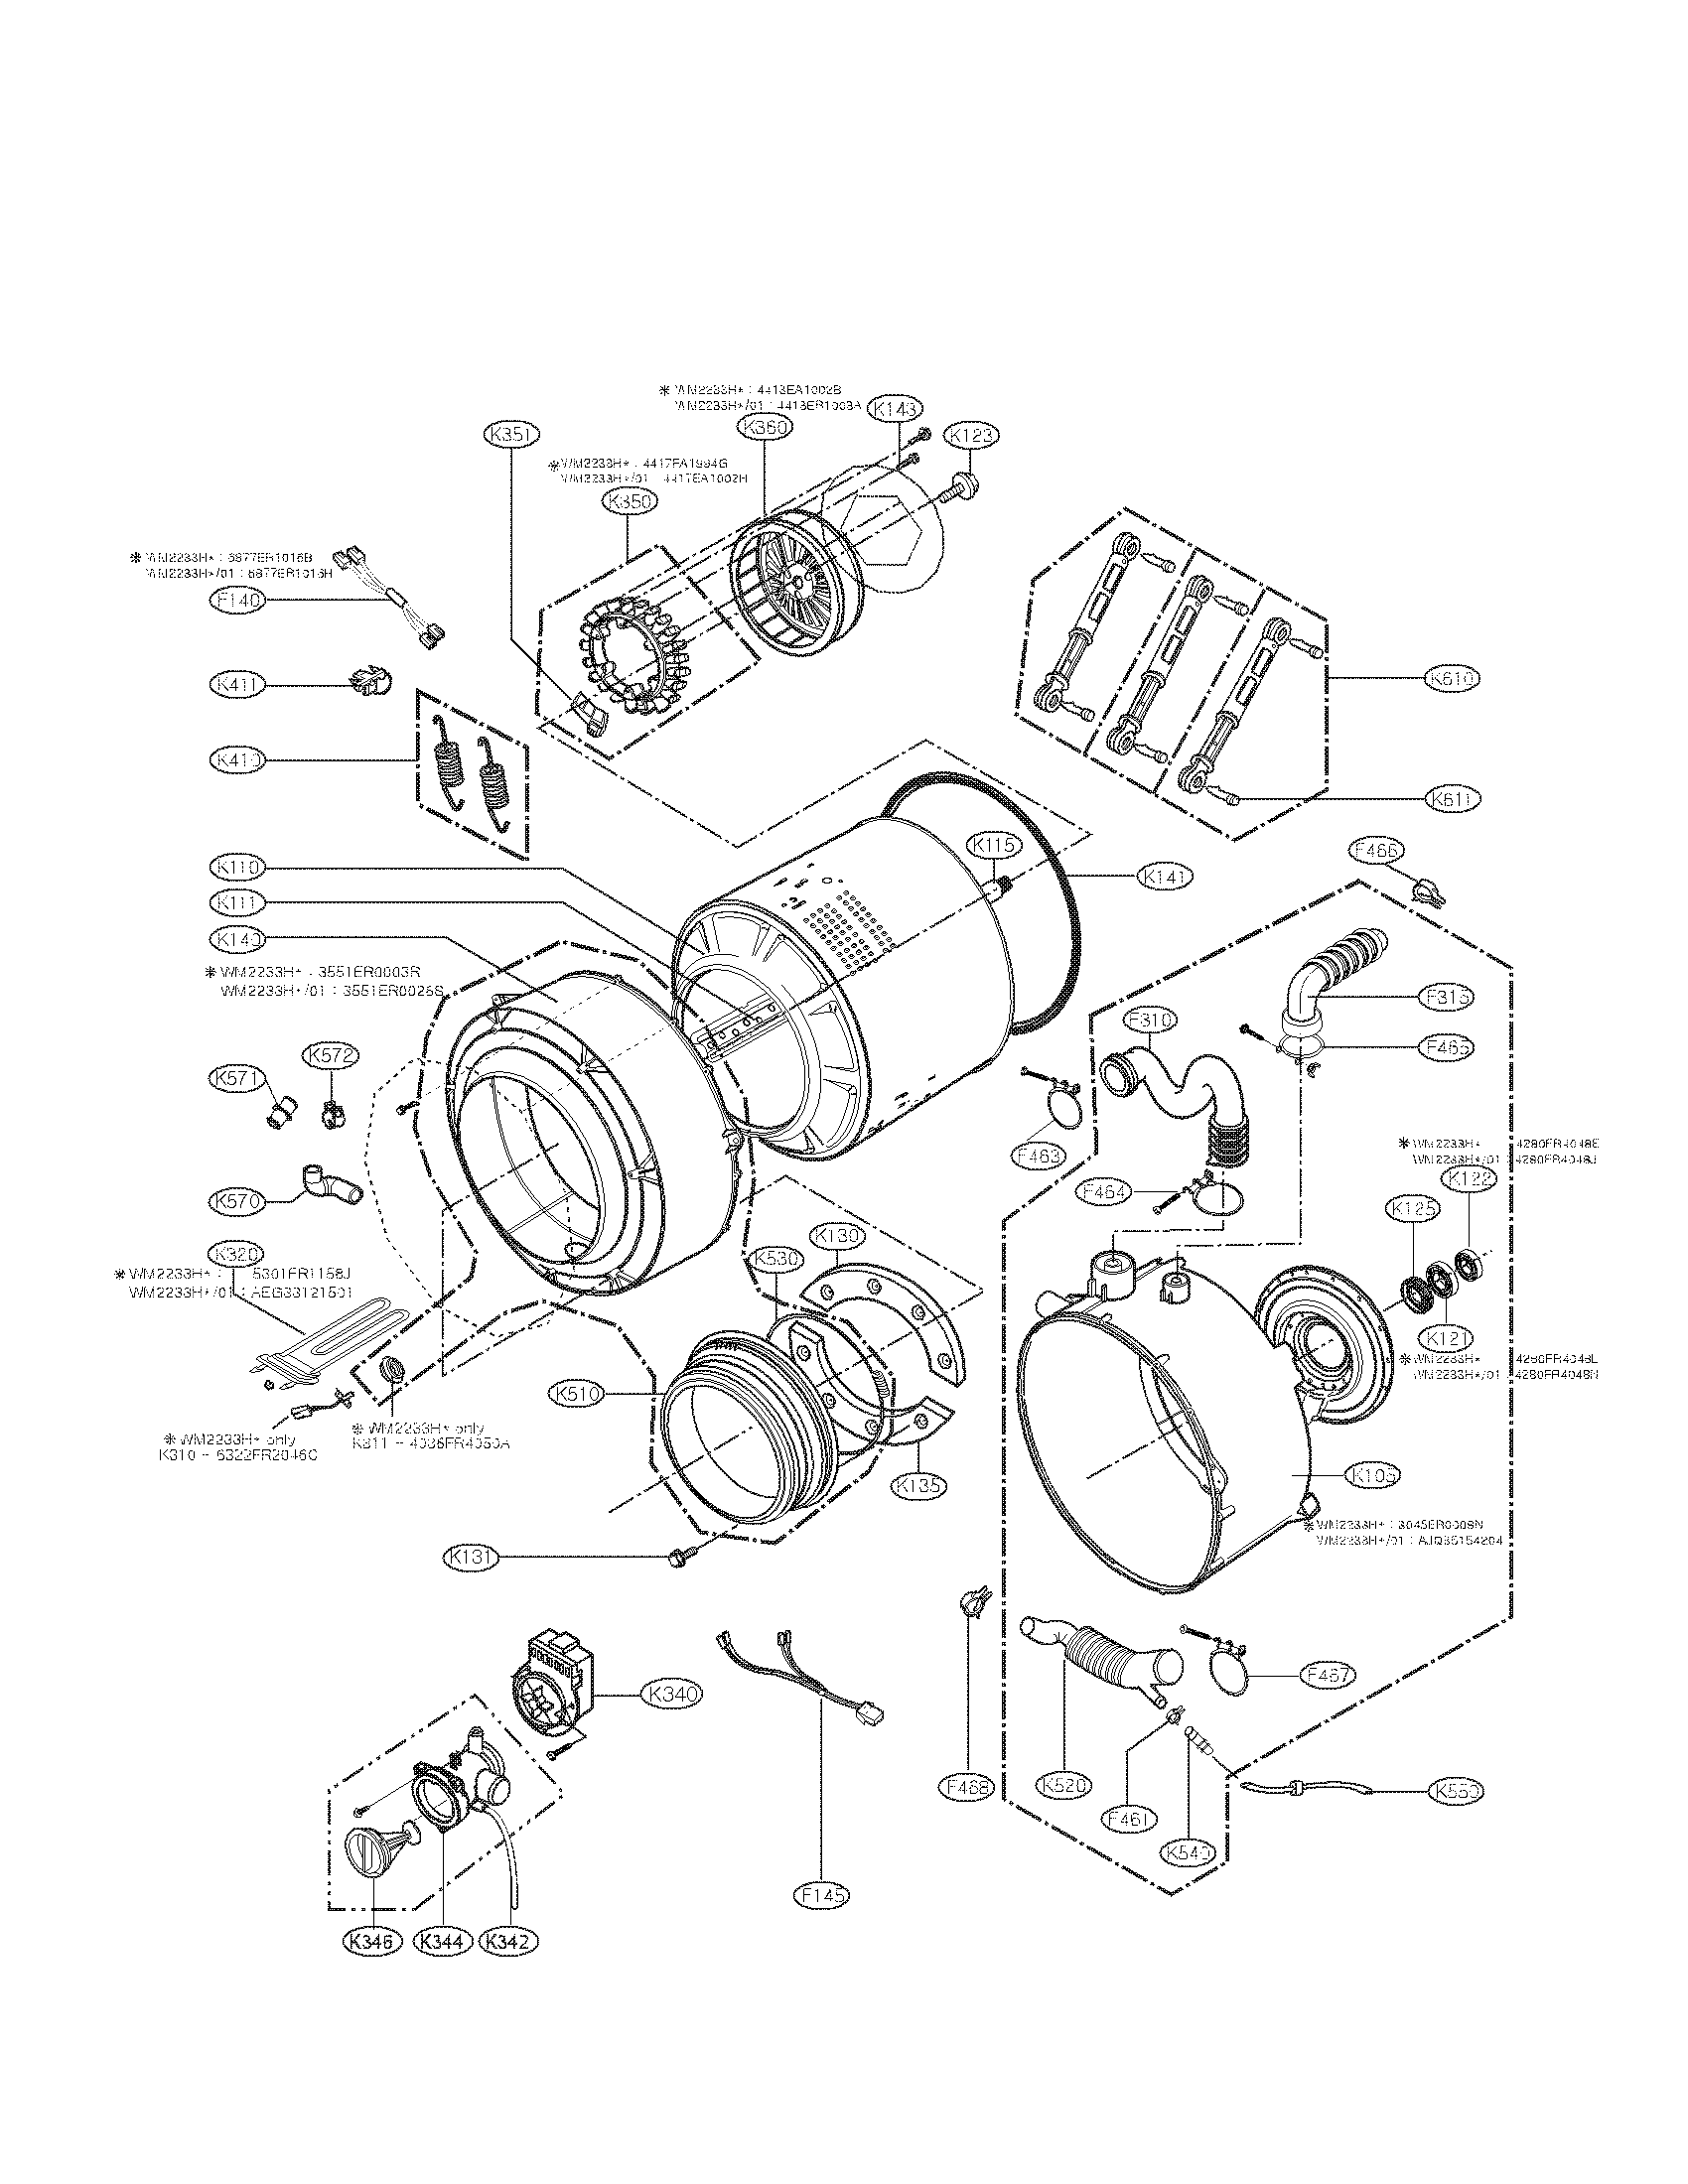 DRUM AND TUB PARTS Diagram & Parts List for Model wm2101hw LG-Parts